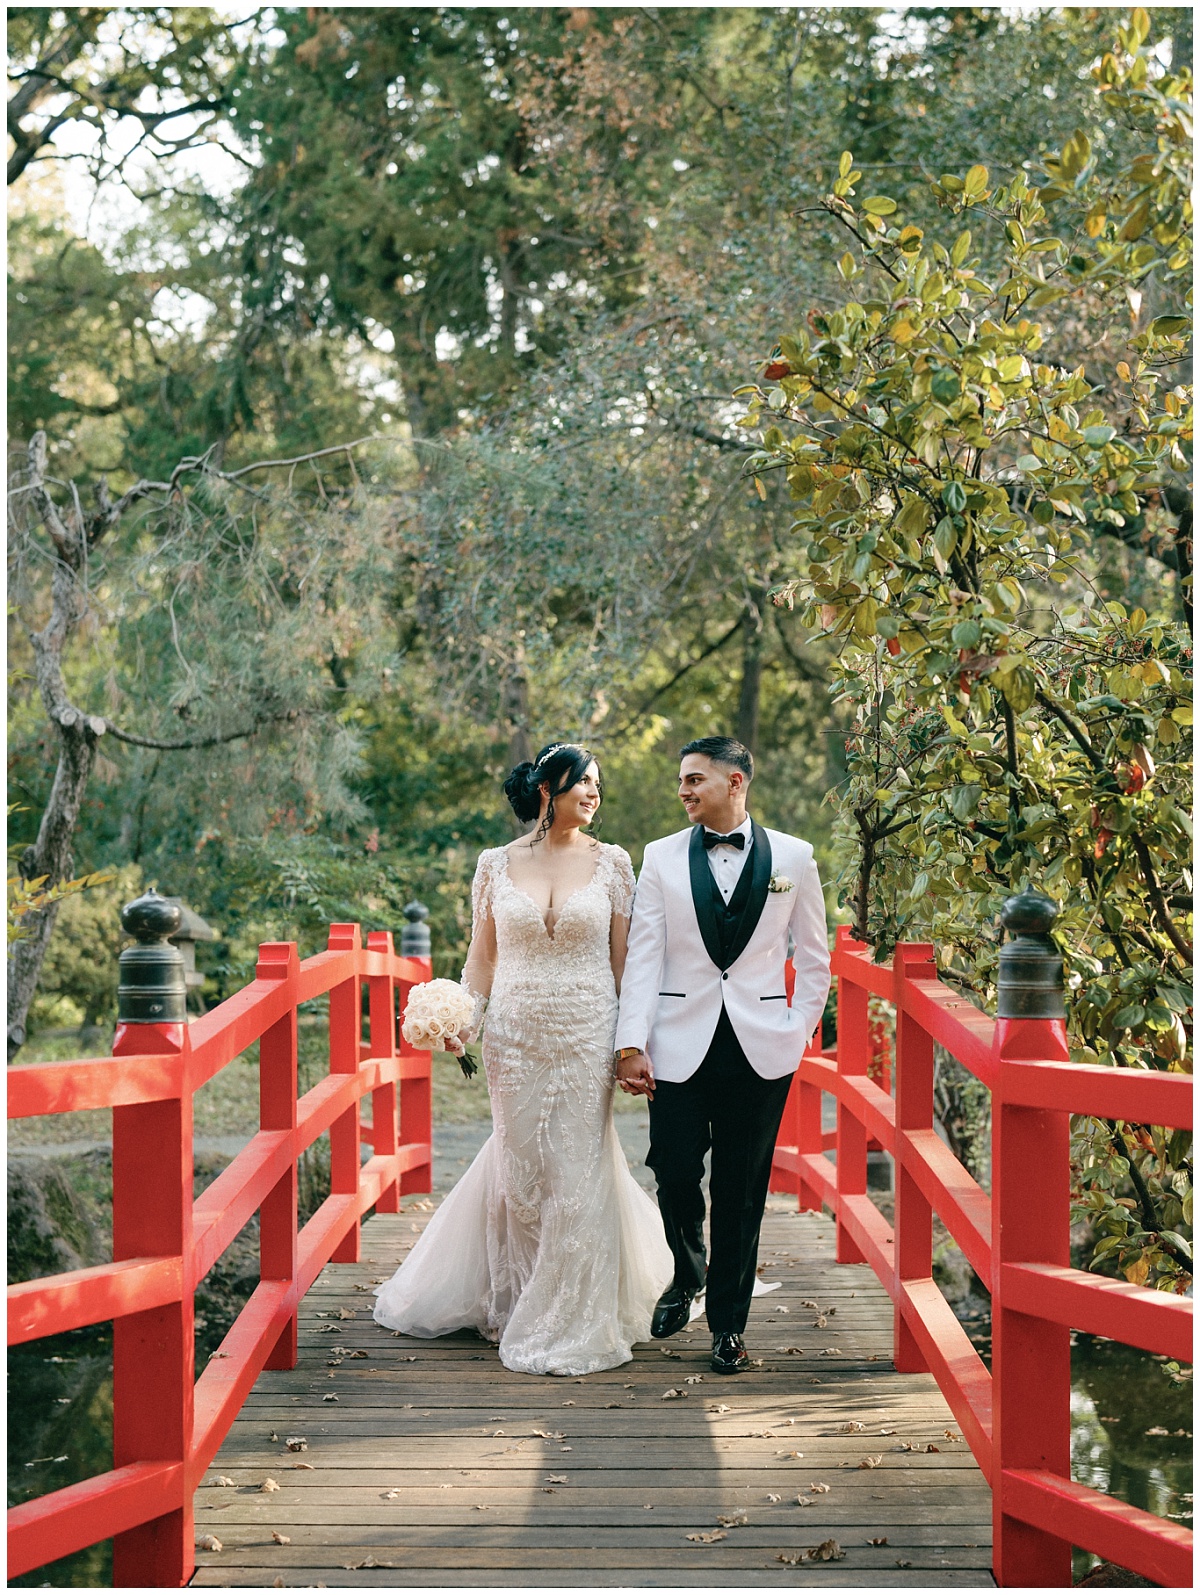 Weddings at the Japanese Garden